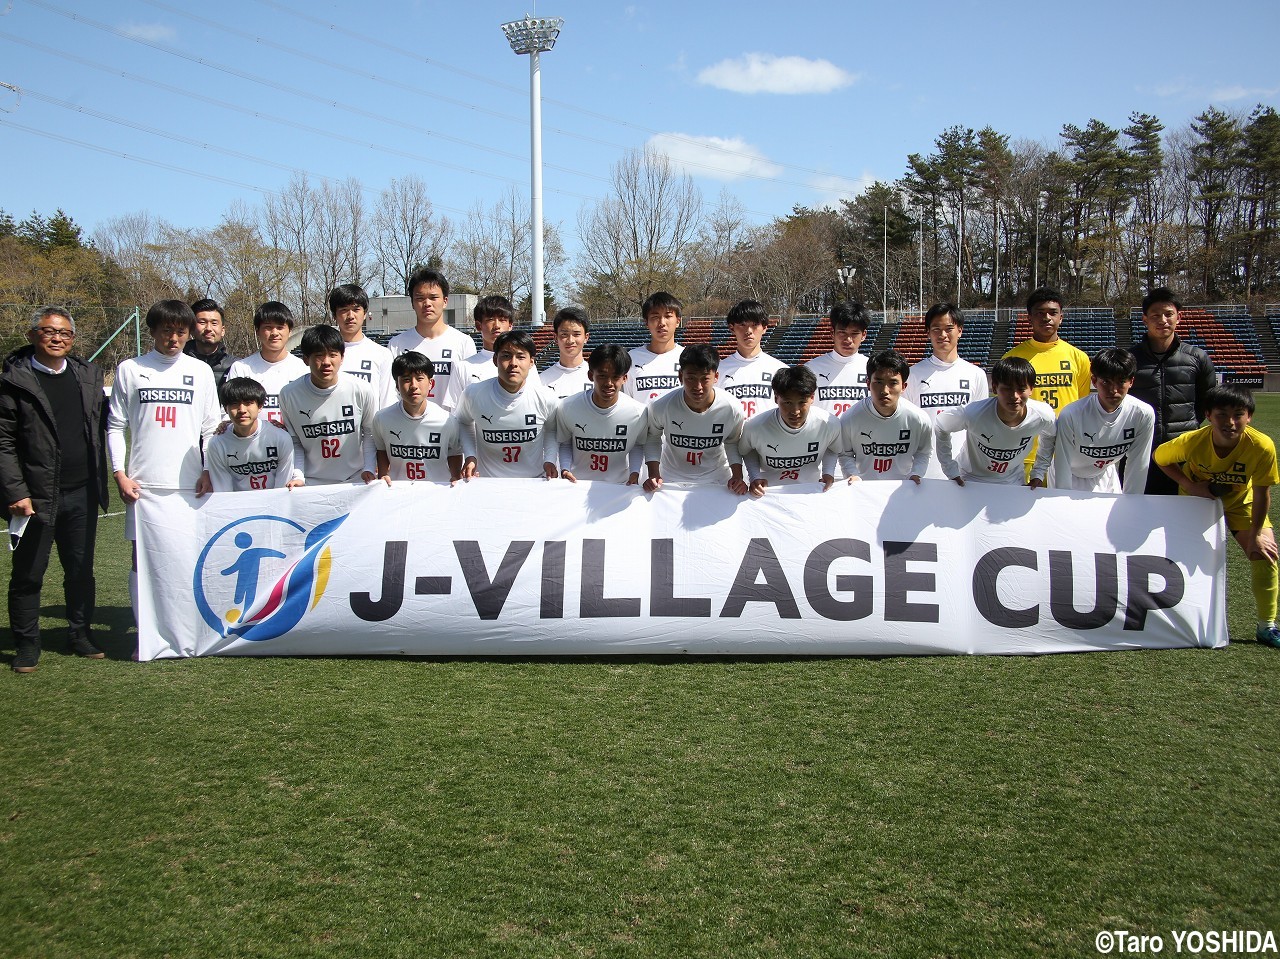 [J-VILLAGE CUP U18]履正社は予選3試合無失点。U-17高校選抜も苦しめ、前向きな準V(16枚)